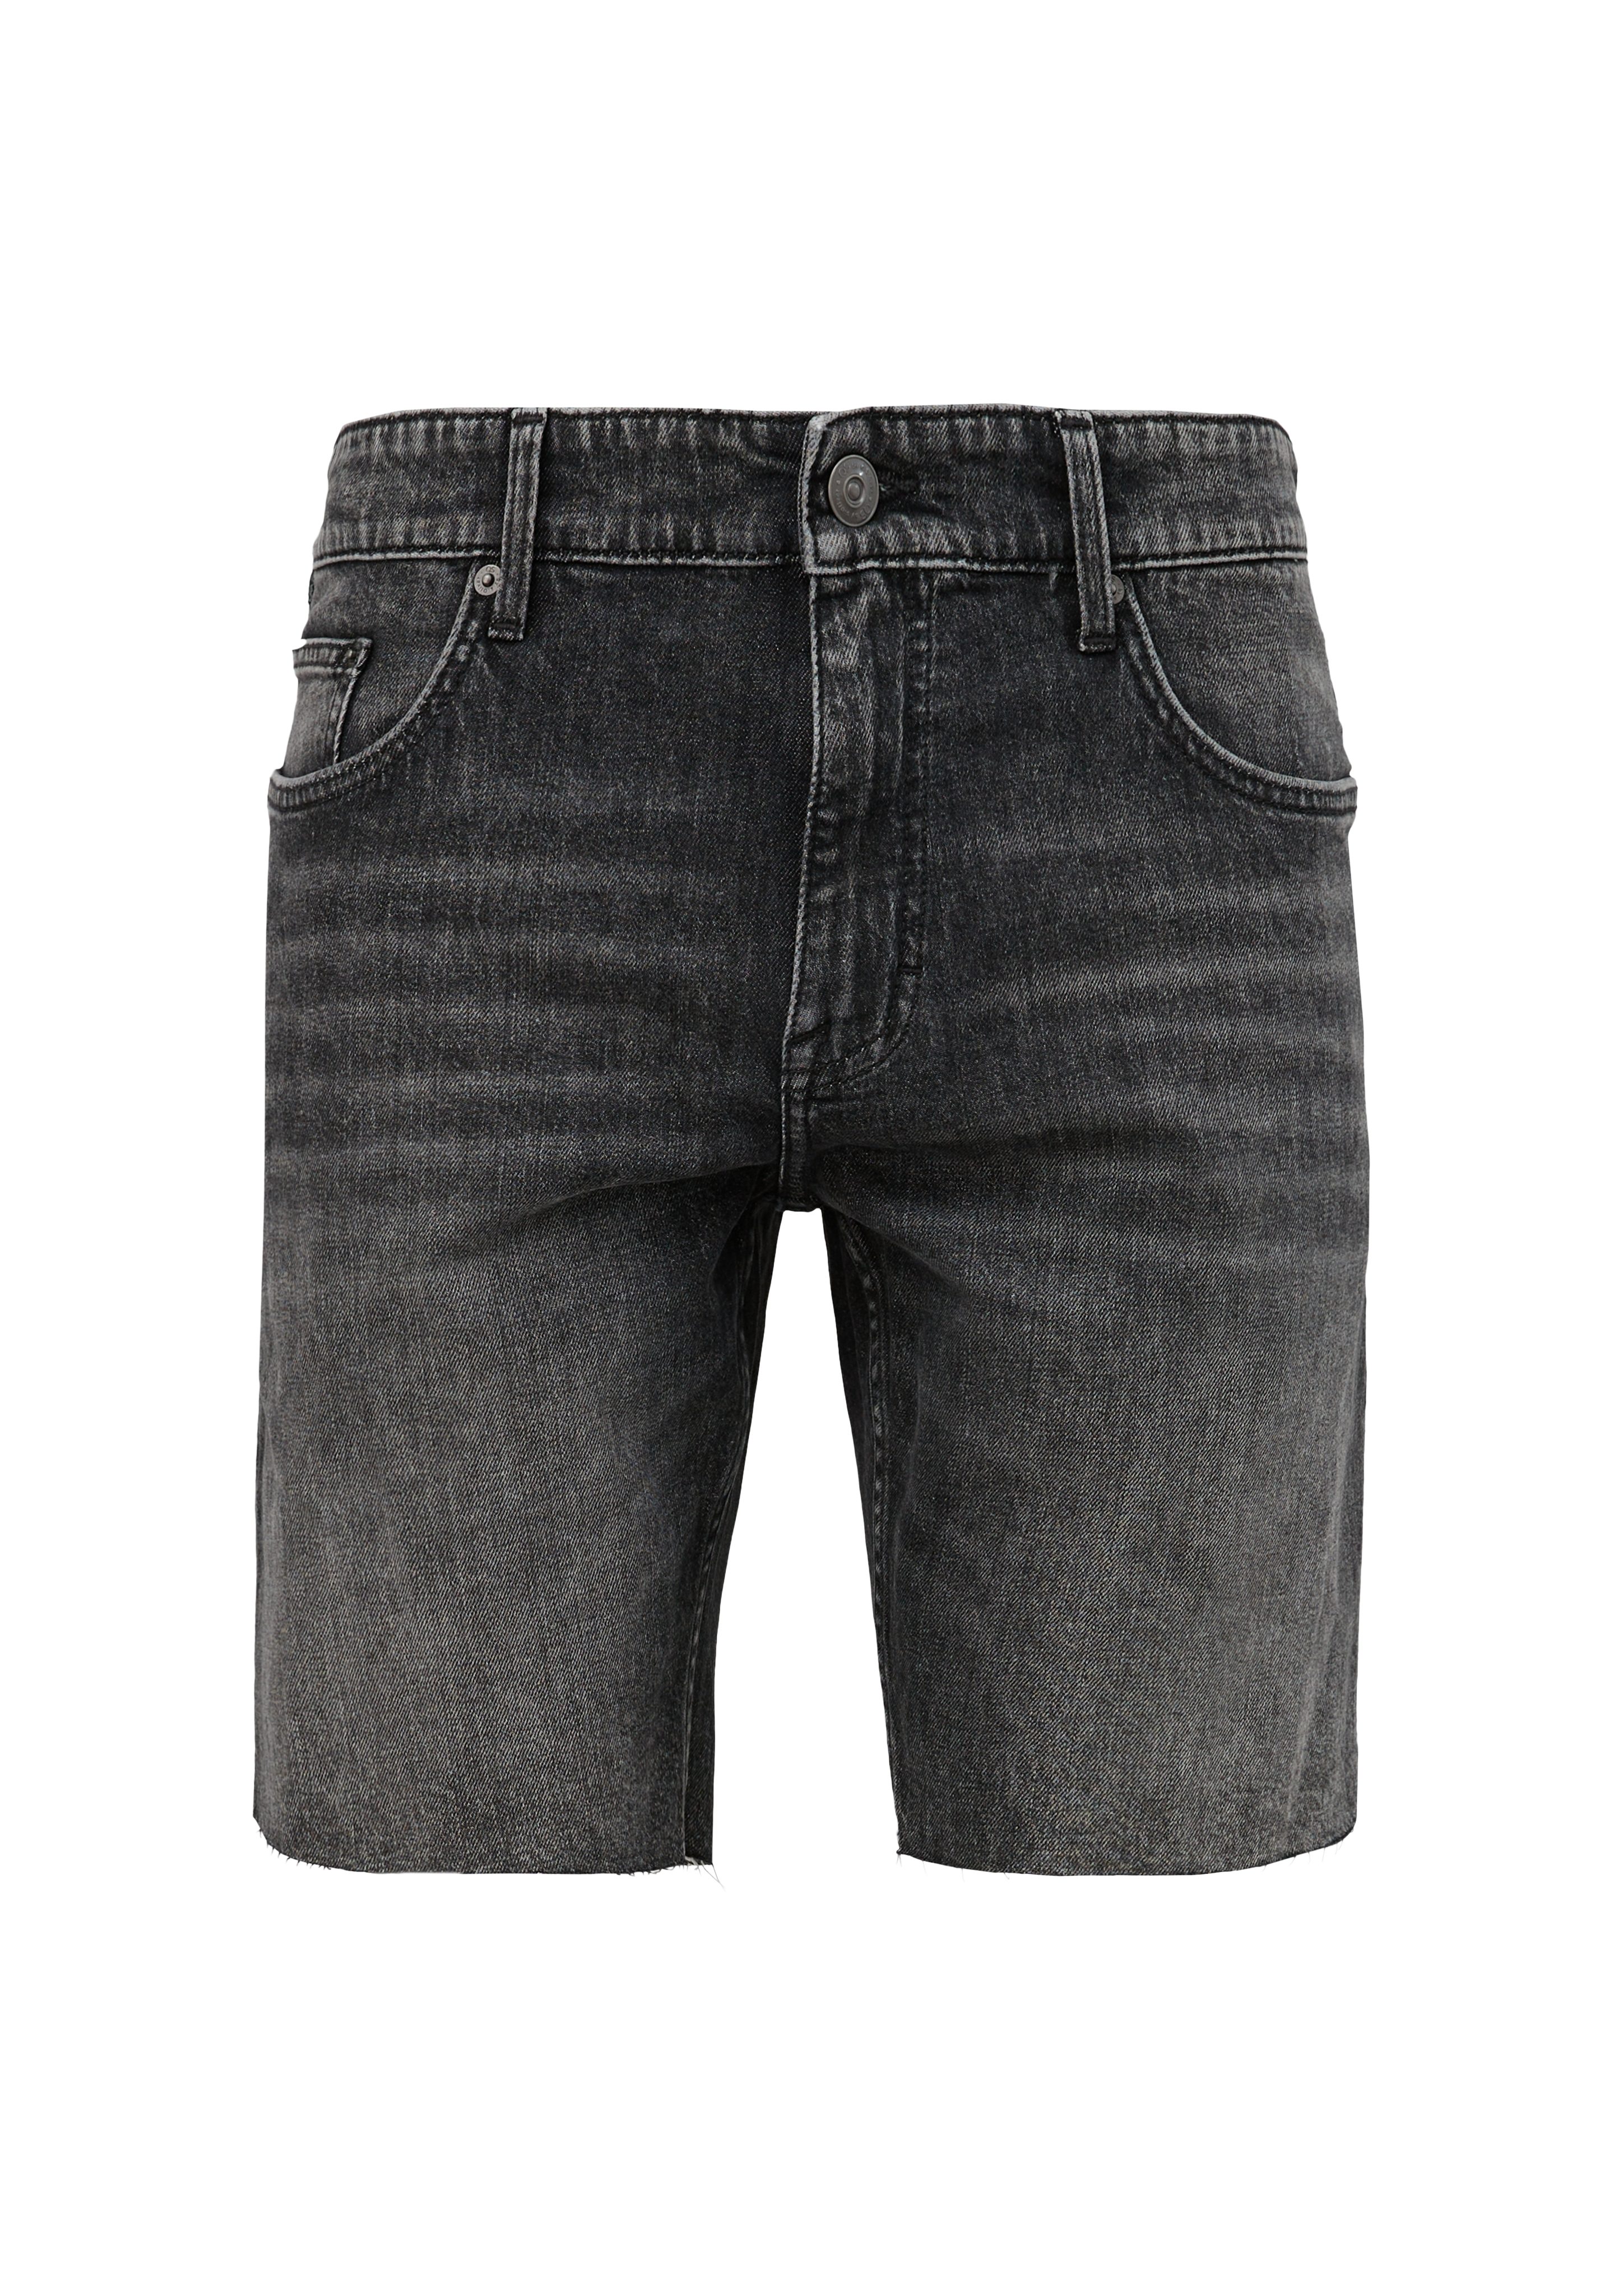 / Rise dunkelgrau Waschung, Label-Patch, Jeansshorts Jeans-Shorts / Ziernaht Fit Regular Mid QS John / Straight Leg